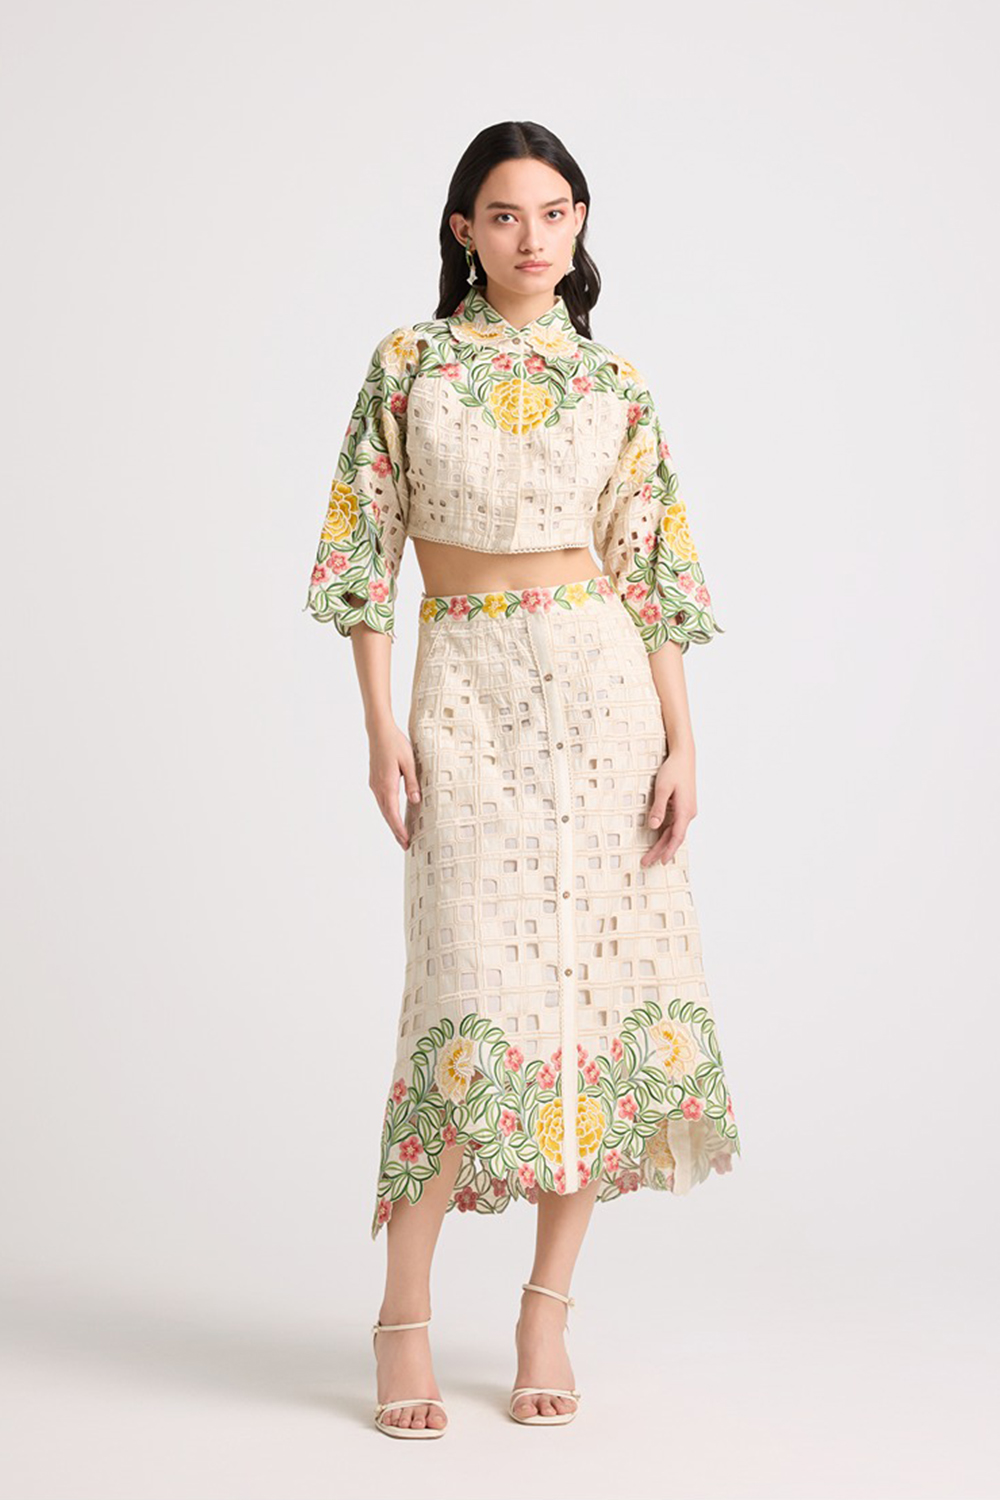 Ivory Floral Checkered Cutwork Buttondown Skirt